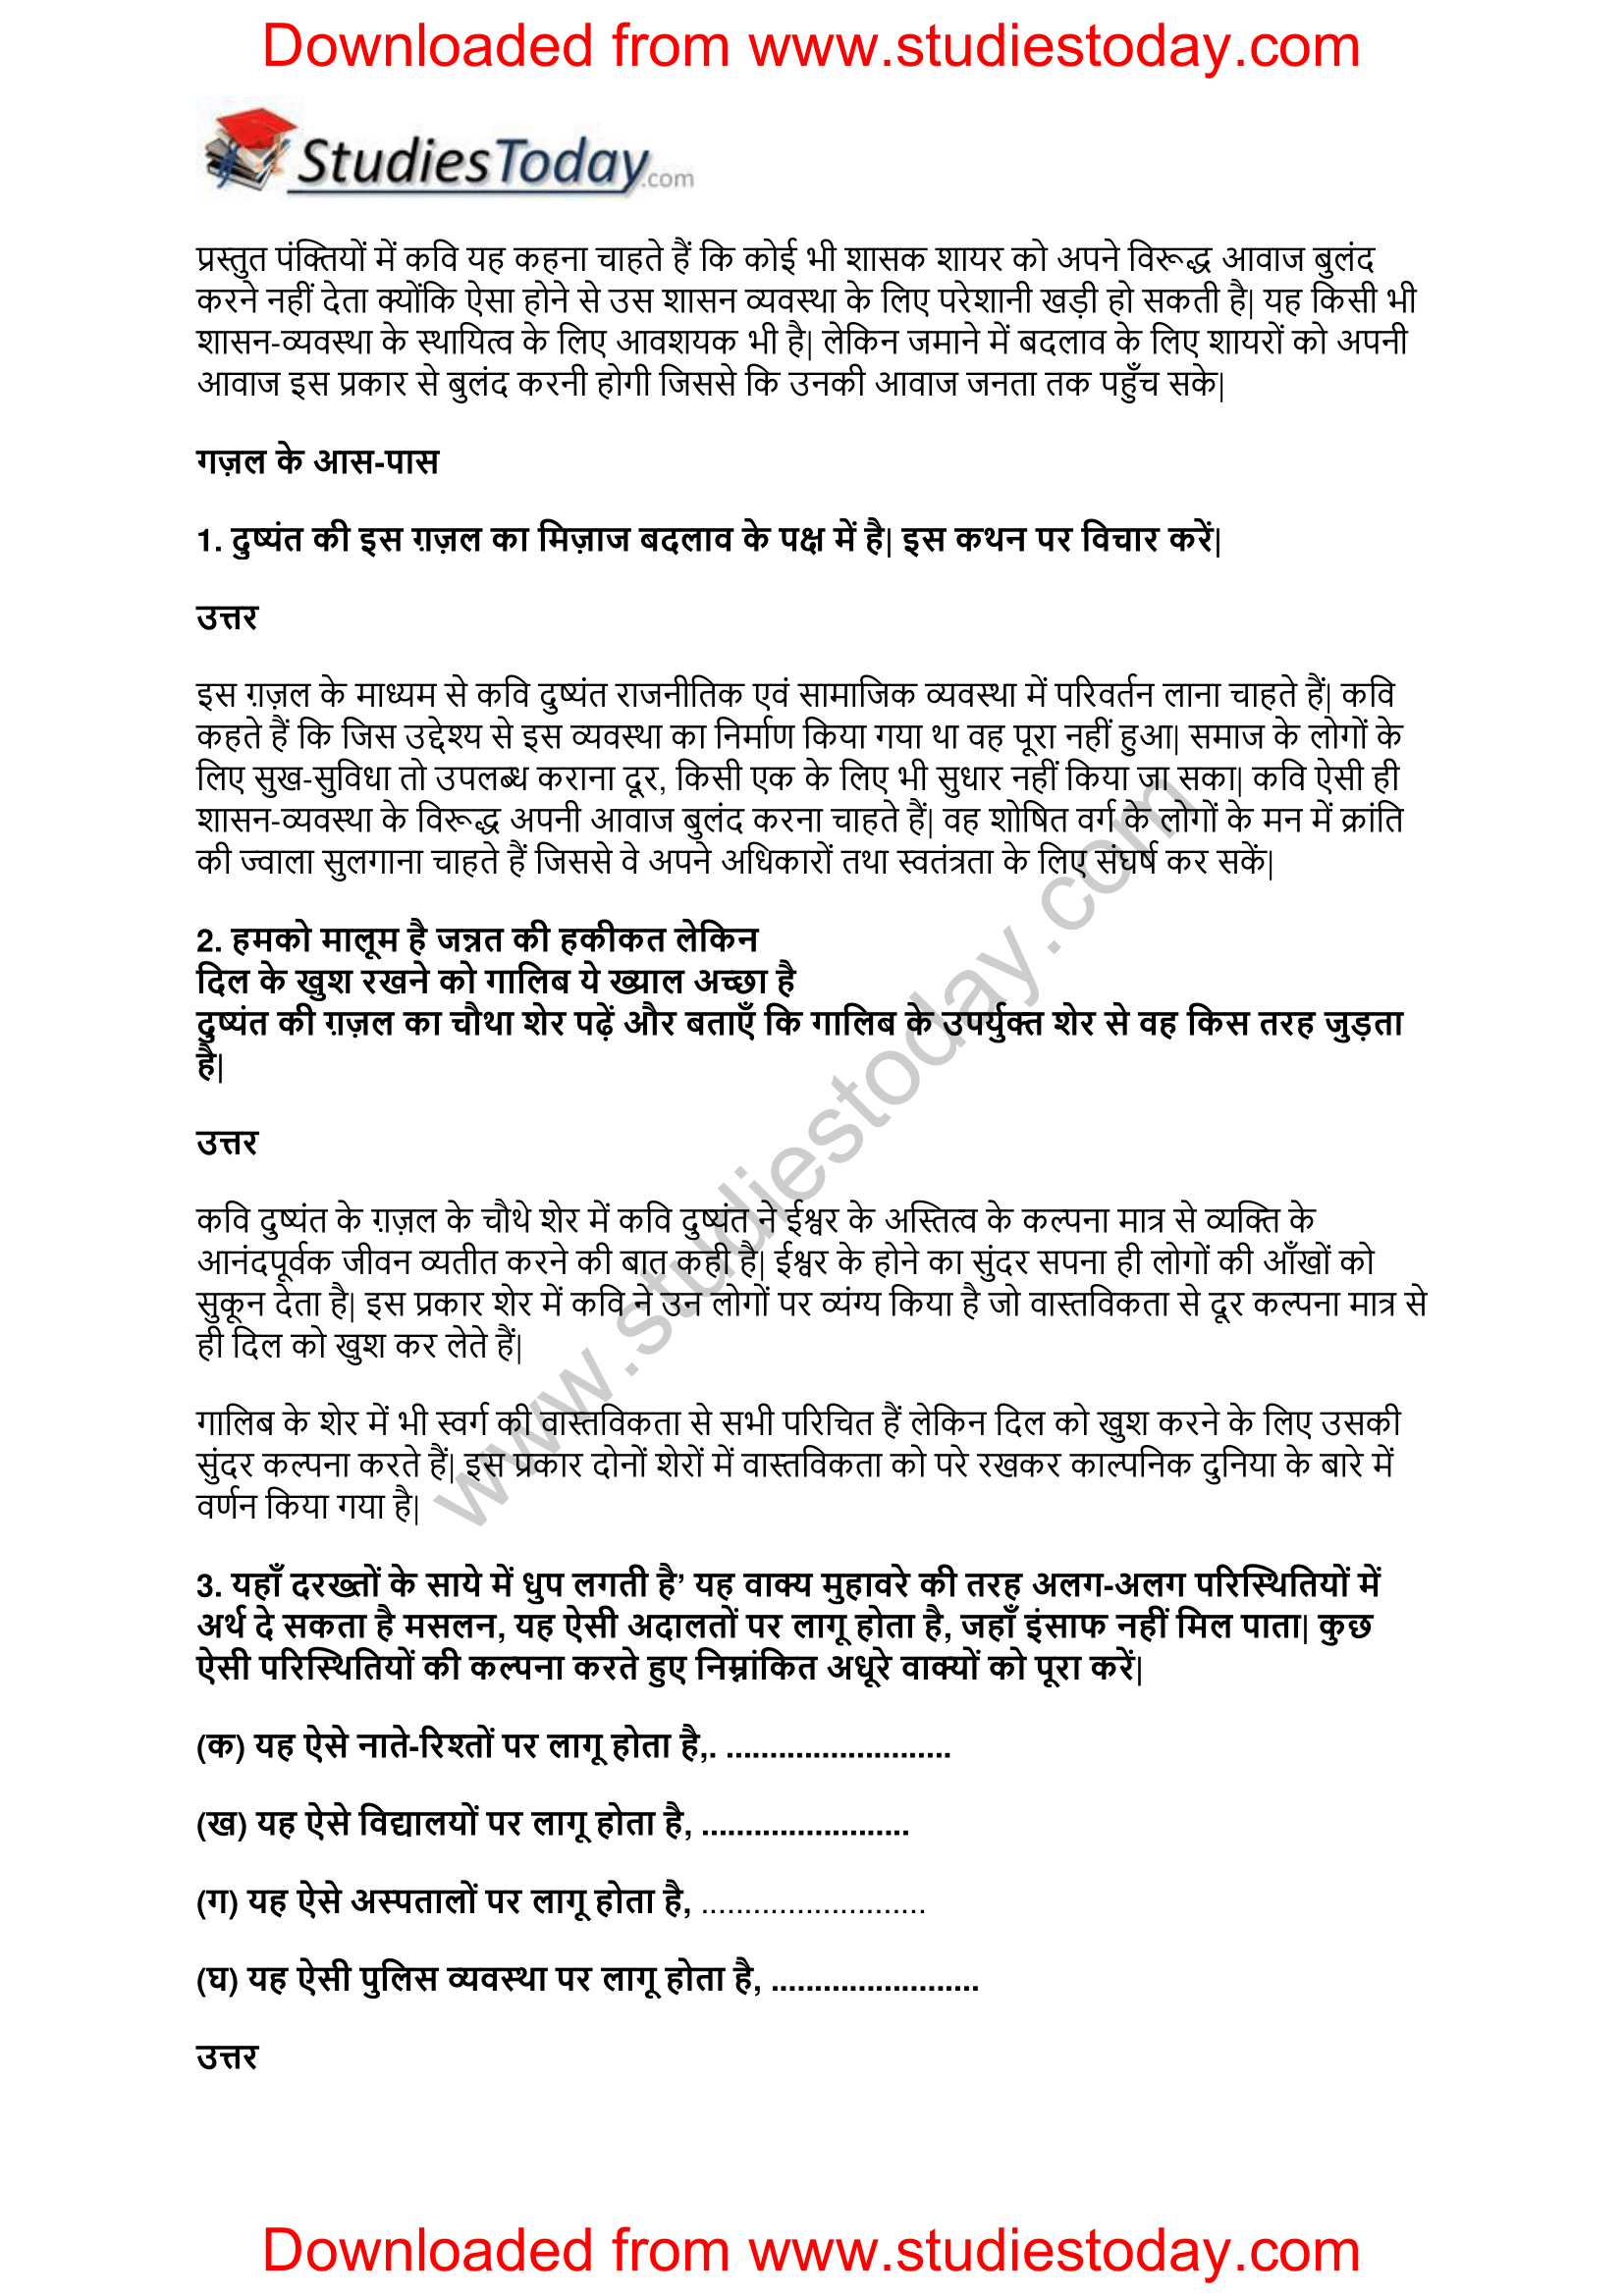 NCERT-Solutions-Class-11-Hindi-Aroh-Poem-Dushyant-Kumar-2